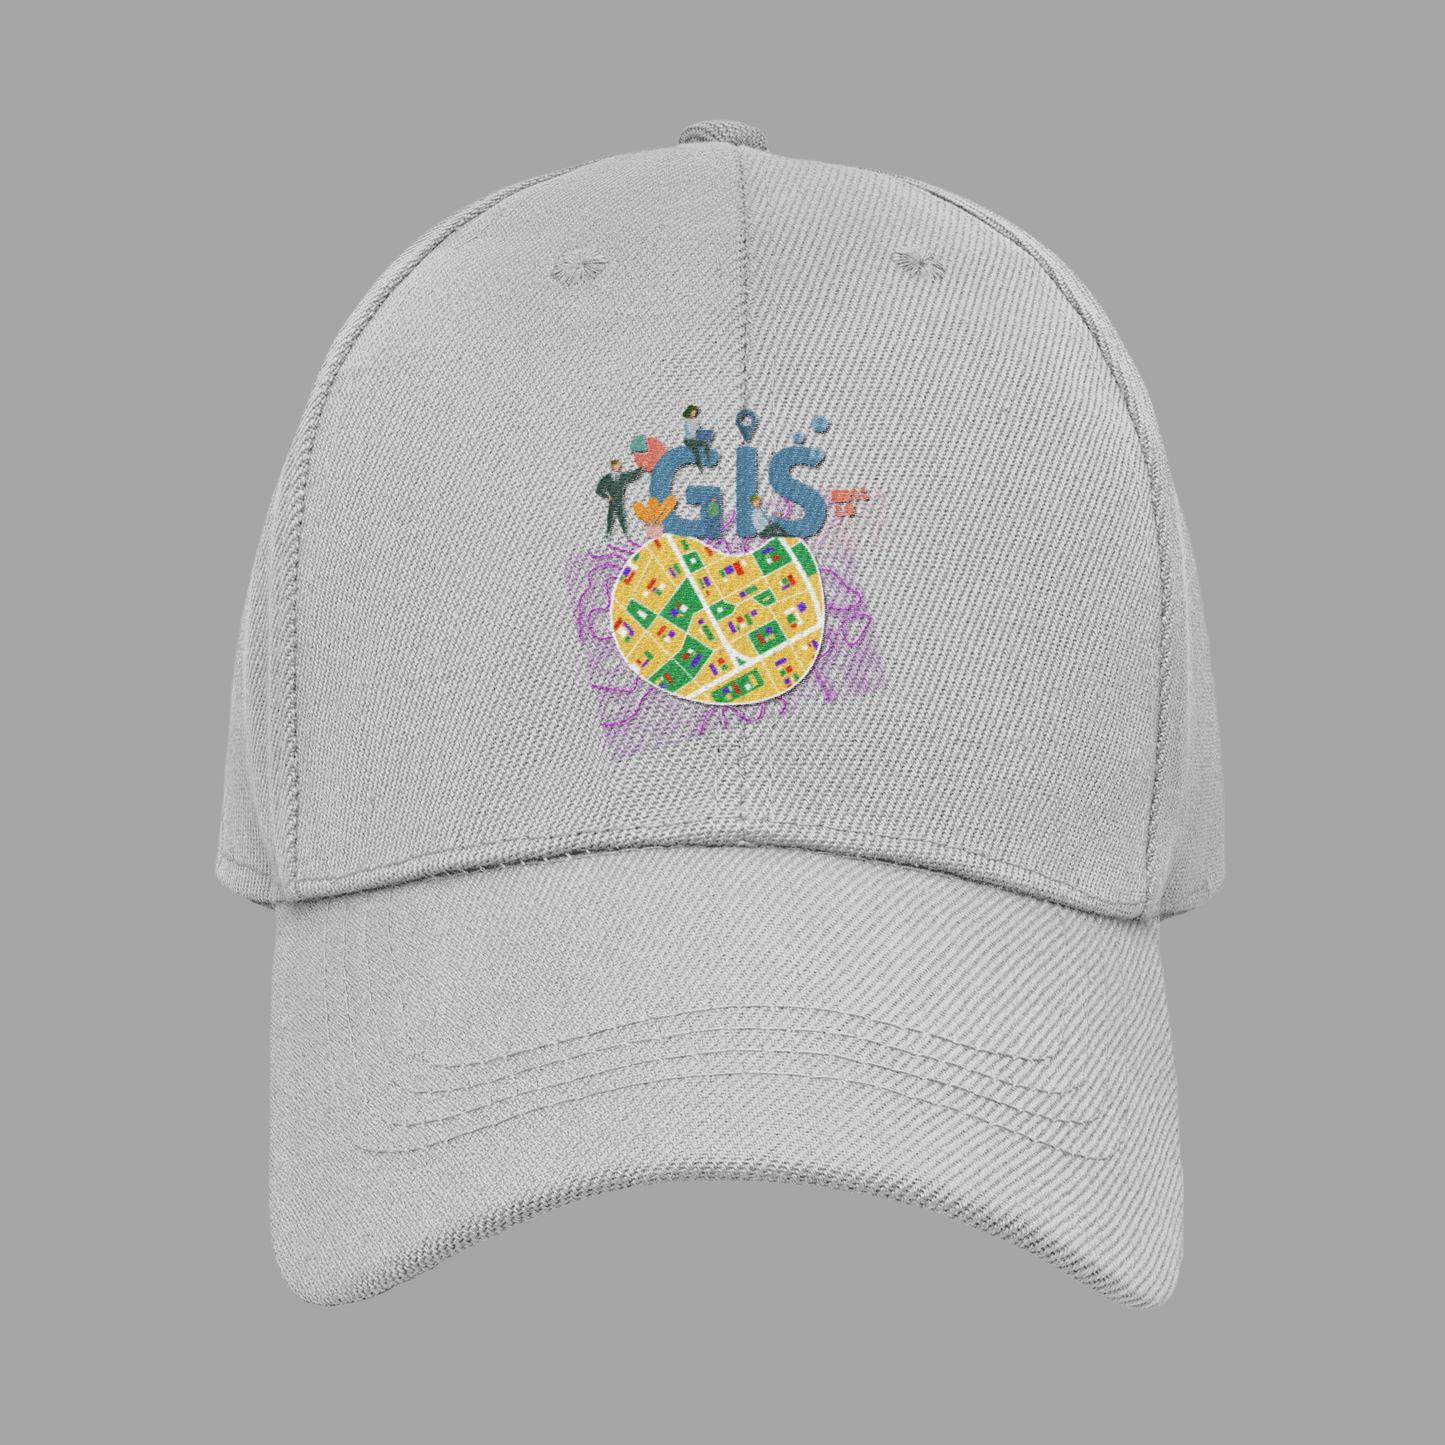 GIS CAP